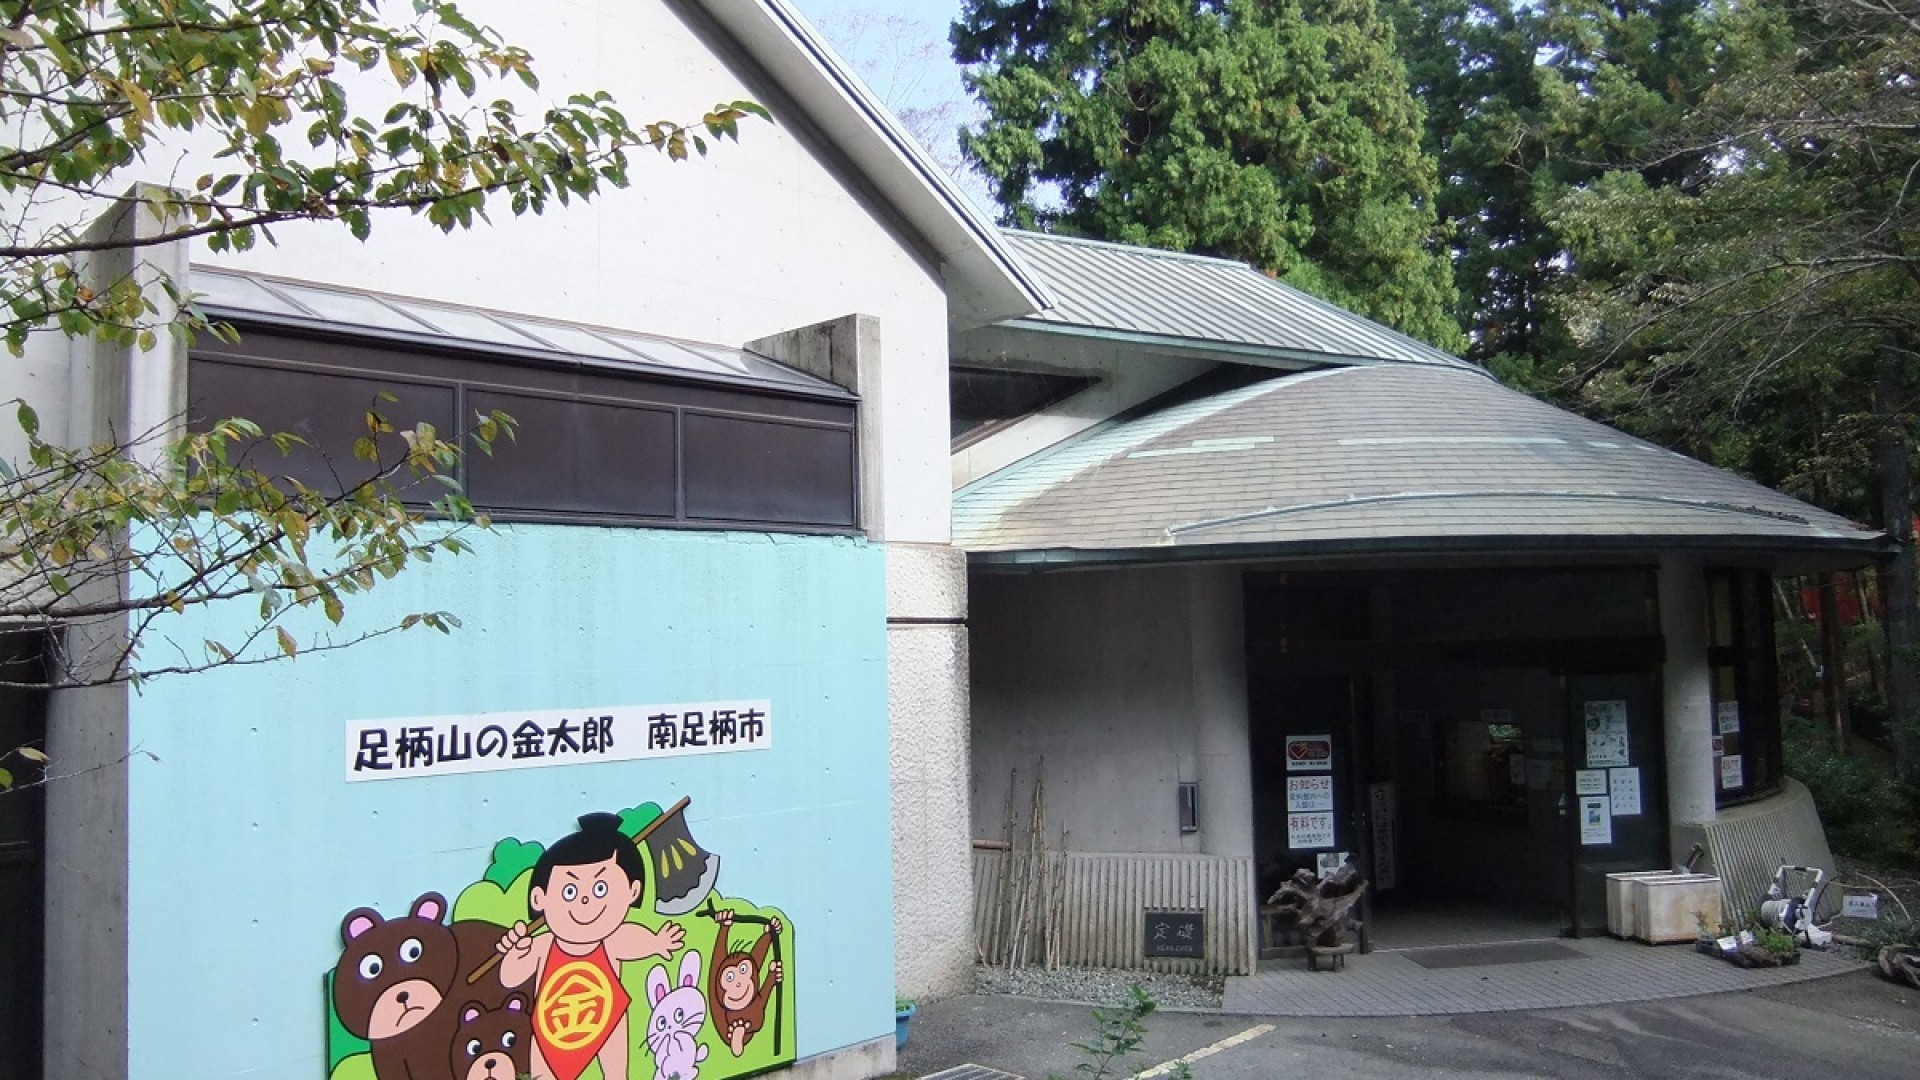 Minamiashigara Folk Museum